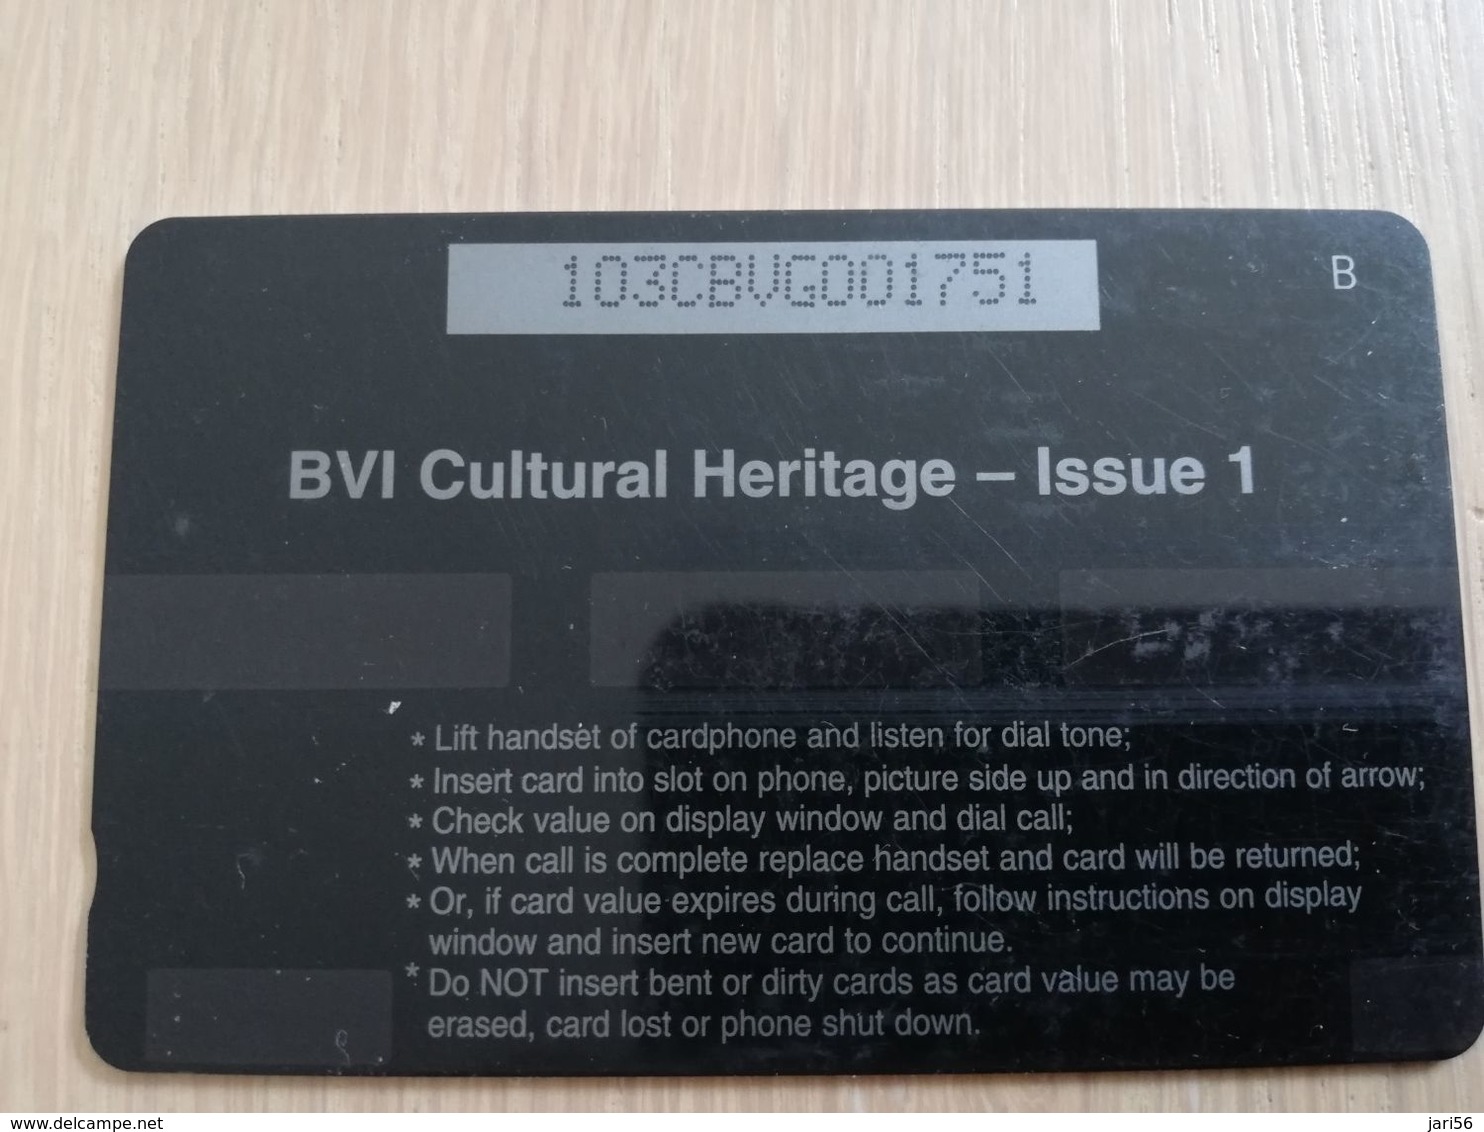 BRITSCH VIRGIN ISLANDS  US$ 20  BVI-103G   HERITAGE DANCERS       103CBVG     Fine Used Card   ** 2671** - Maagdeneilanden